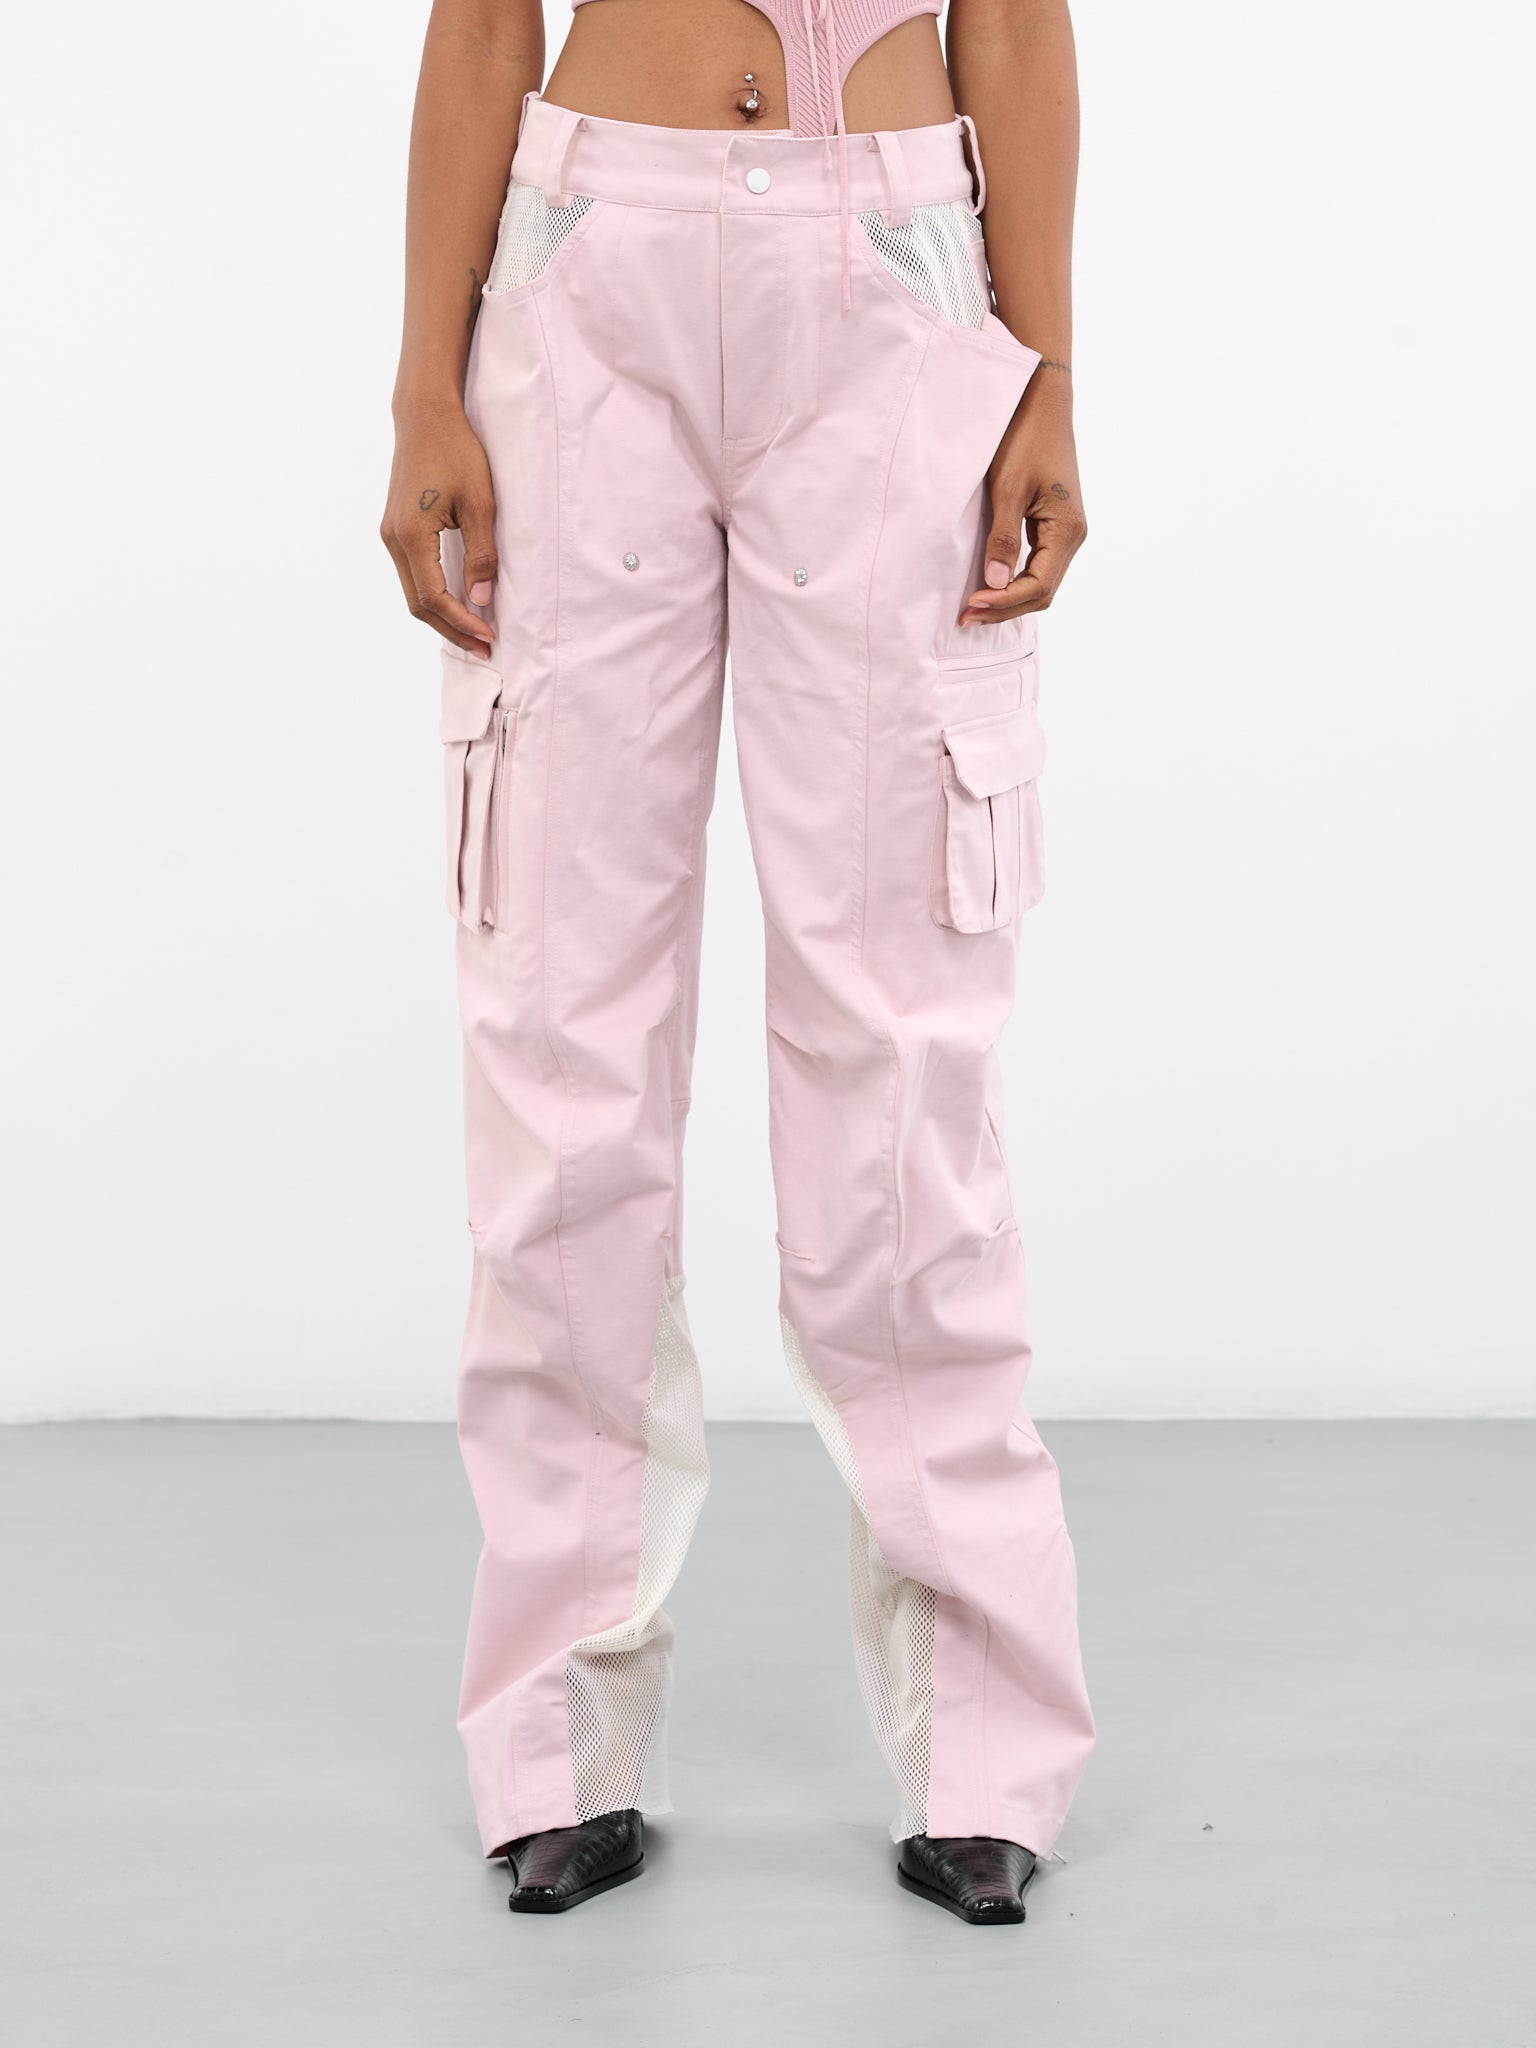 Womens pants COZY pink